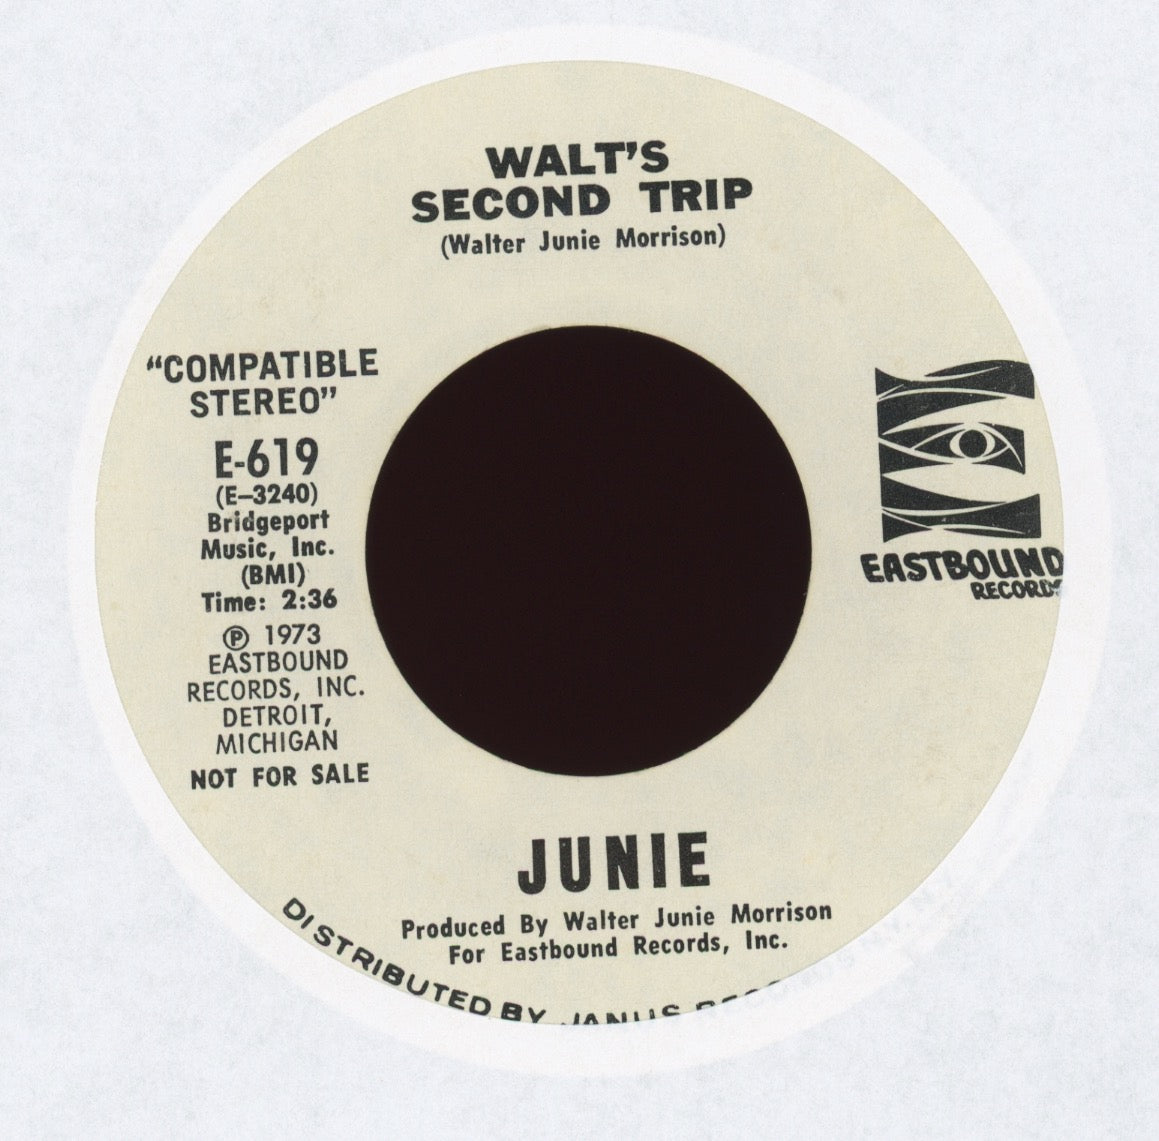 Junie Morrison - Tightrope on Eastbound Promo